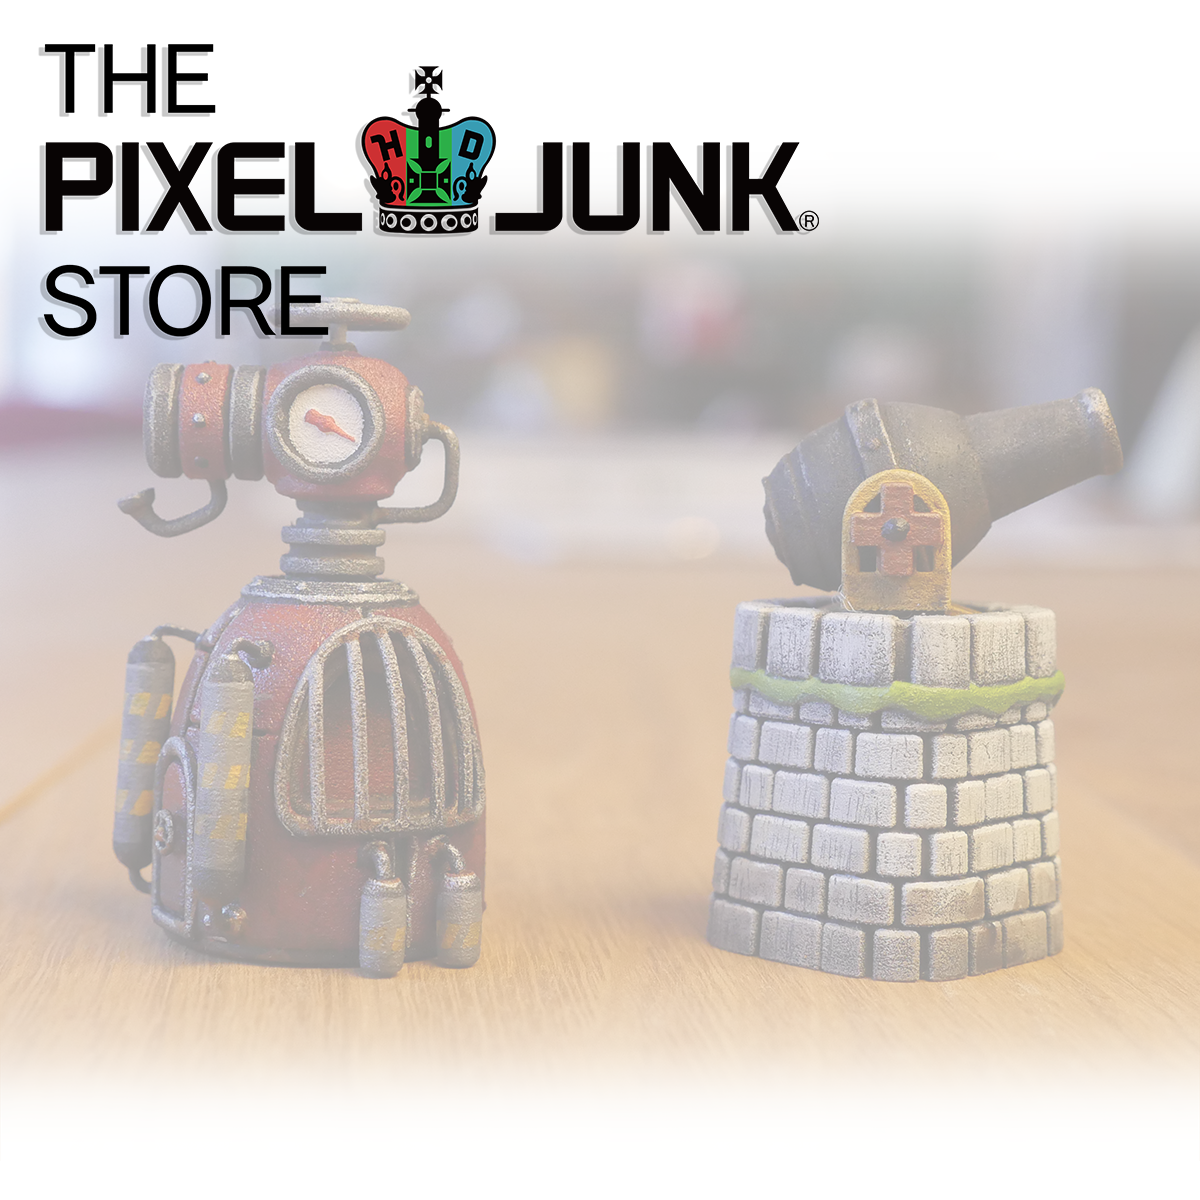 The PixelJunk Store